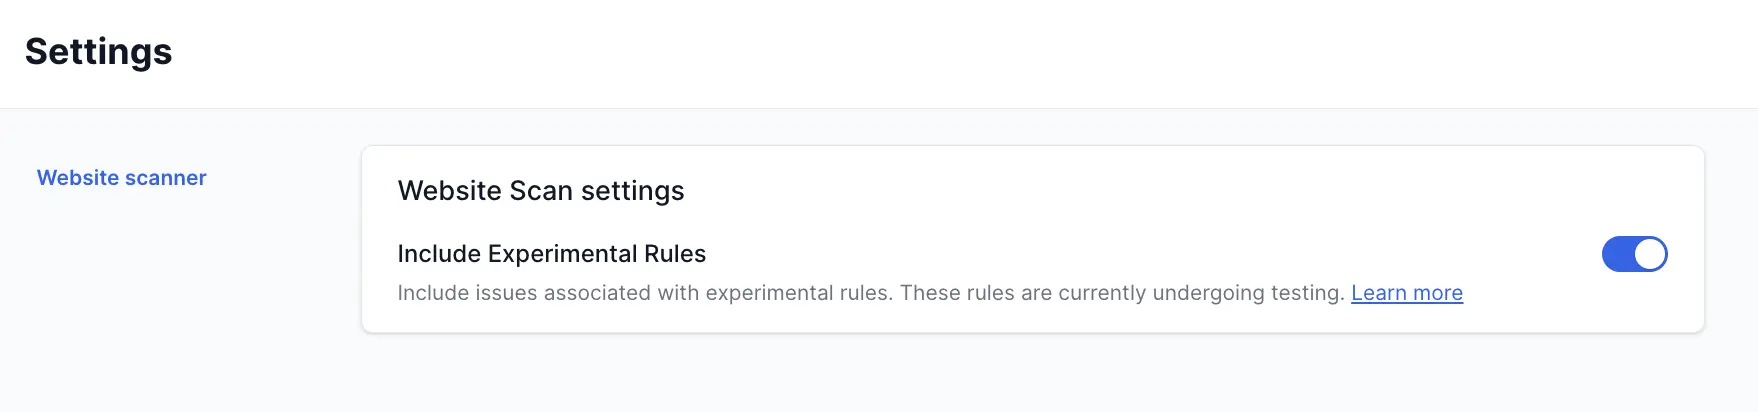 Website Scanner - Experimental Rules